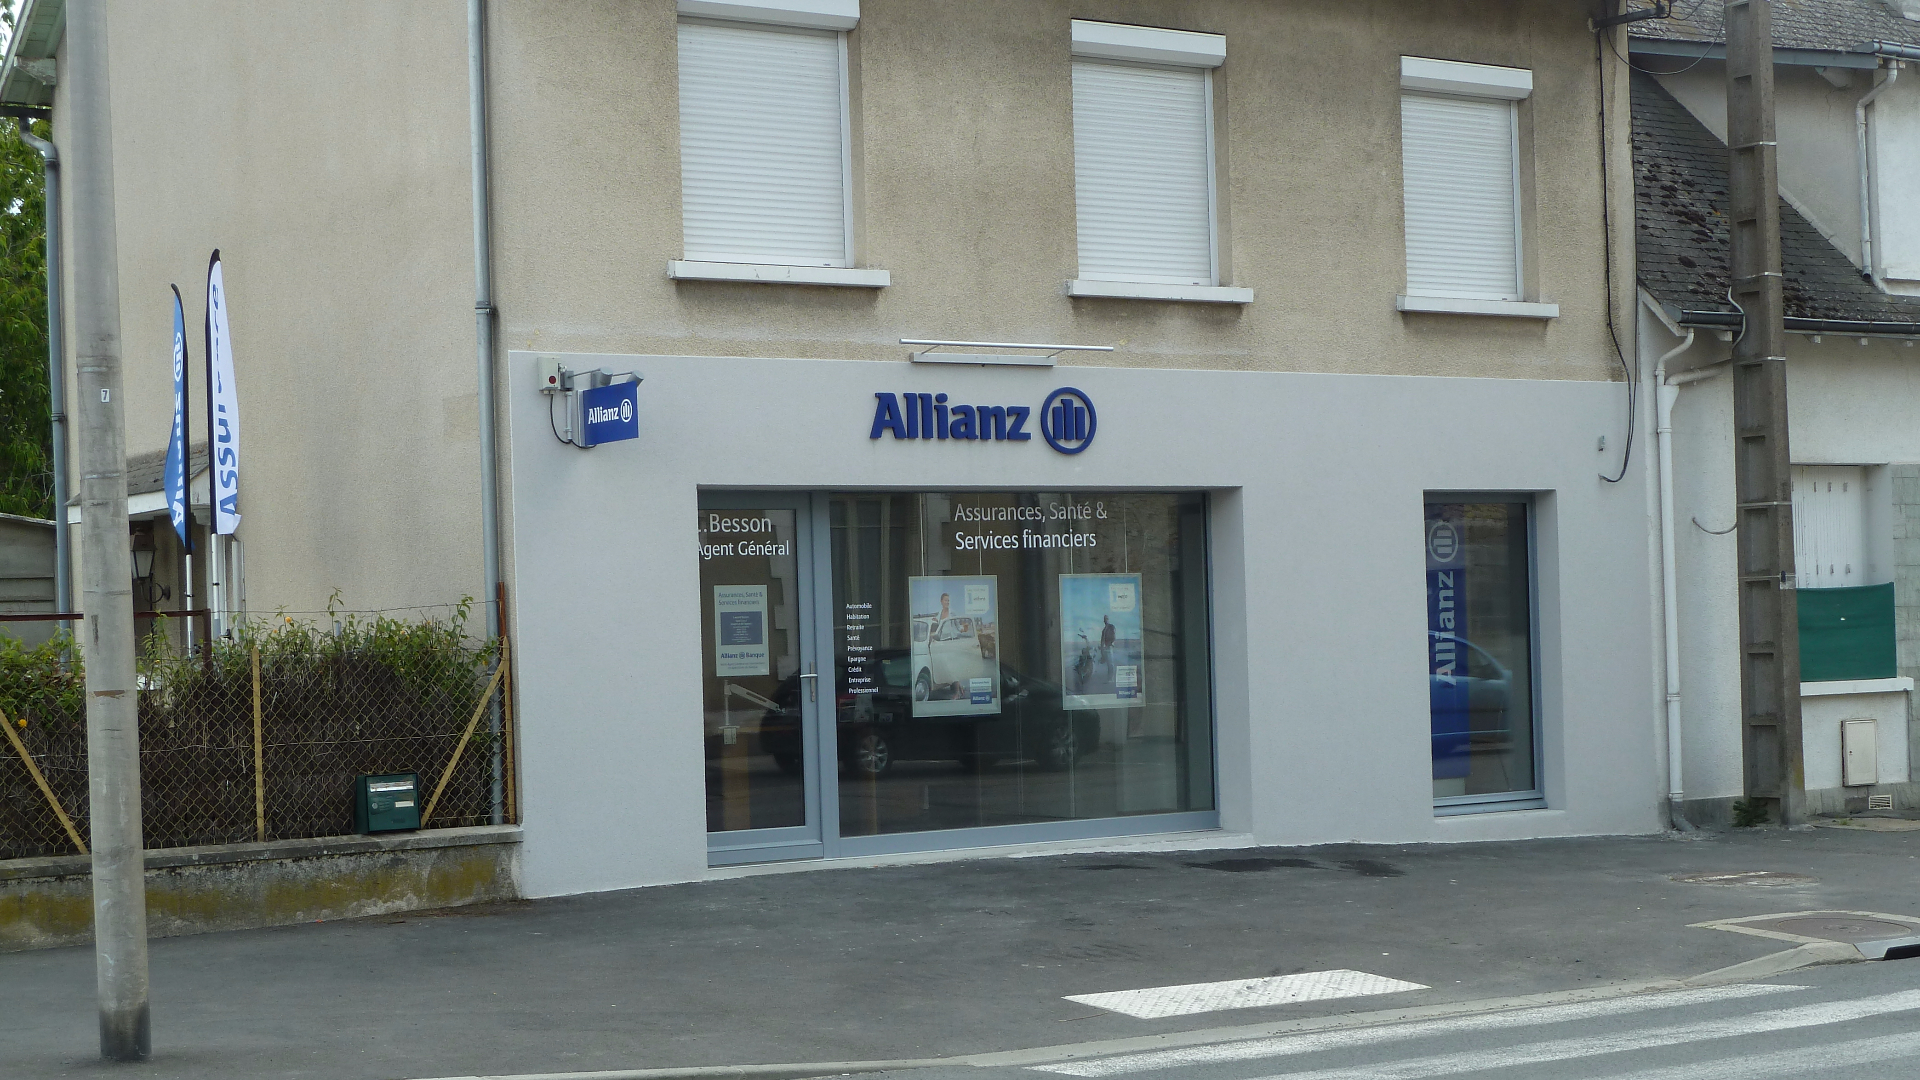 Allianz THOUARS - Laurent BESSON